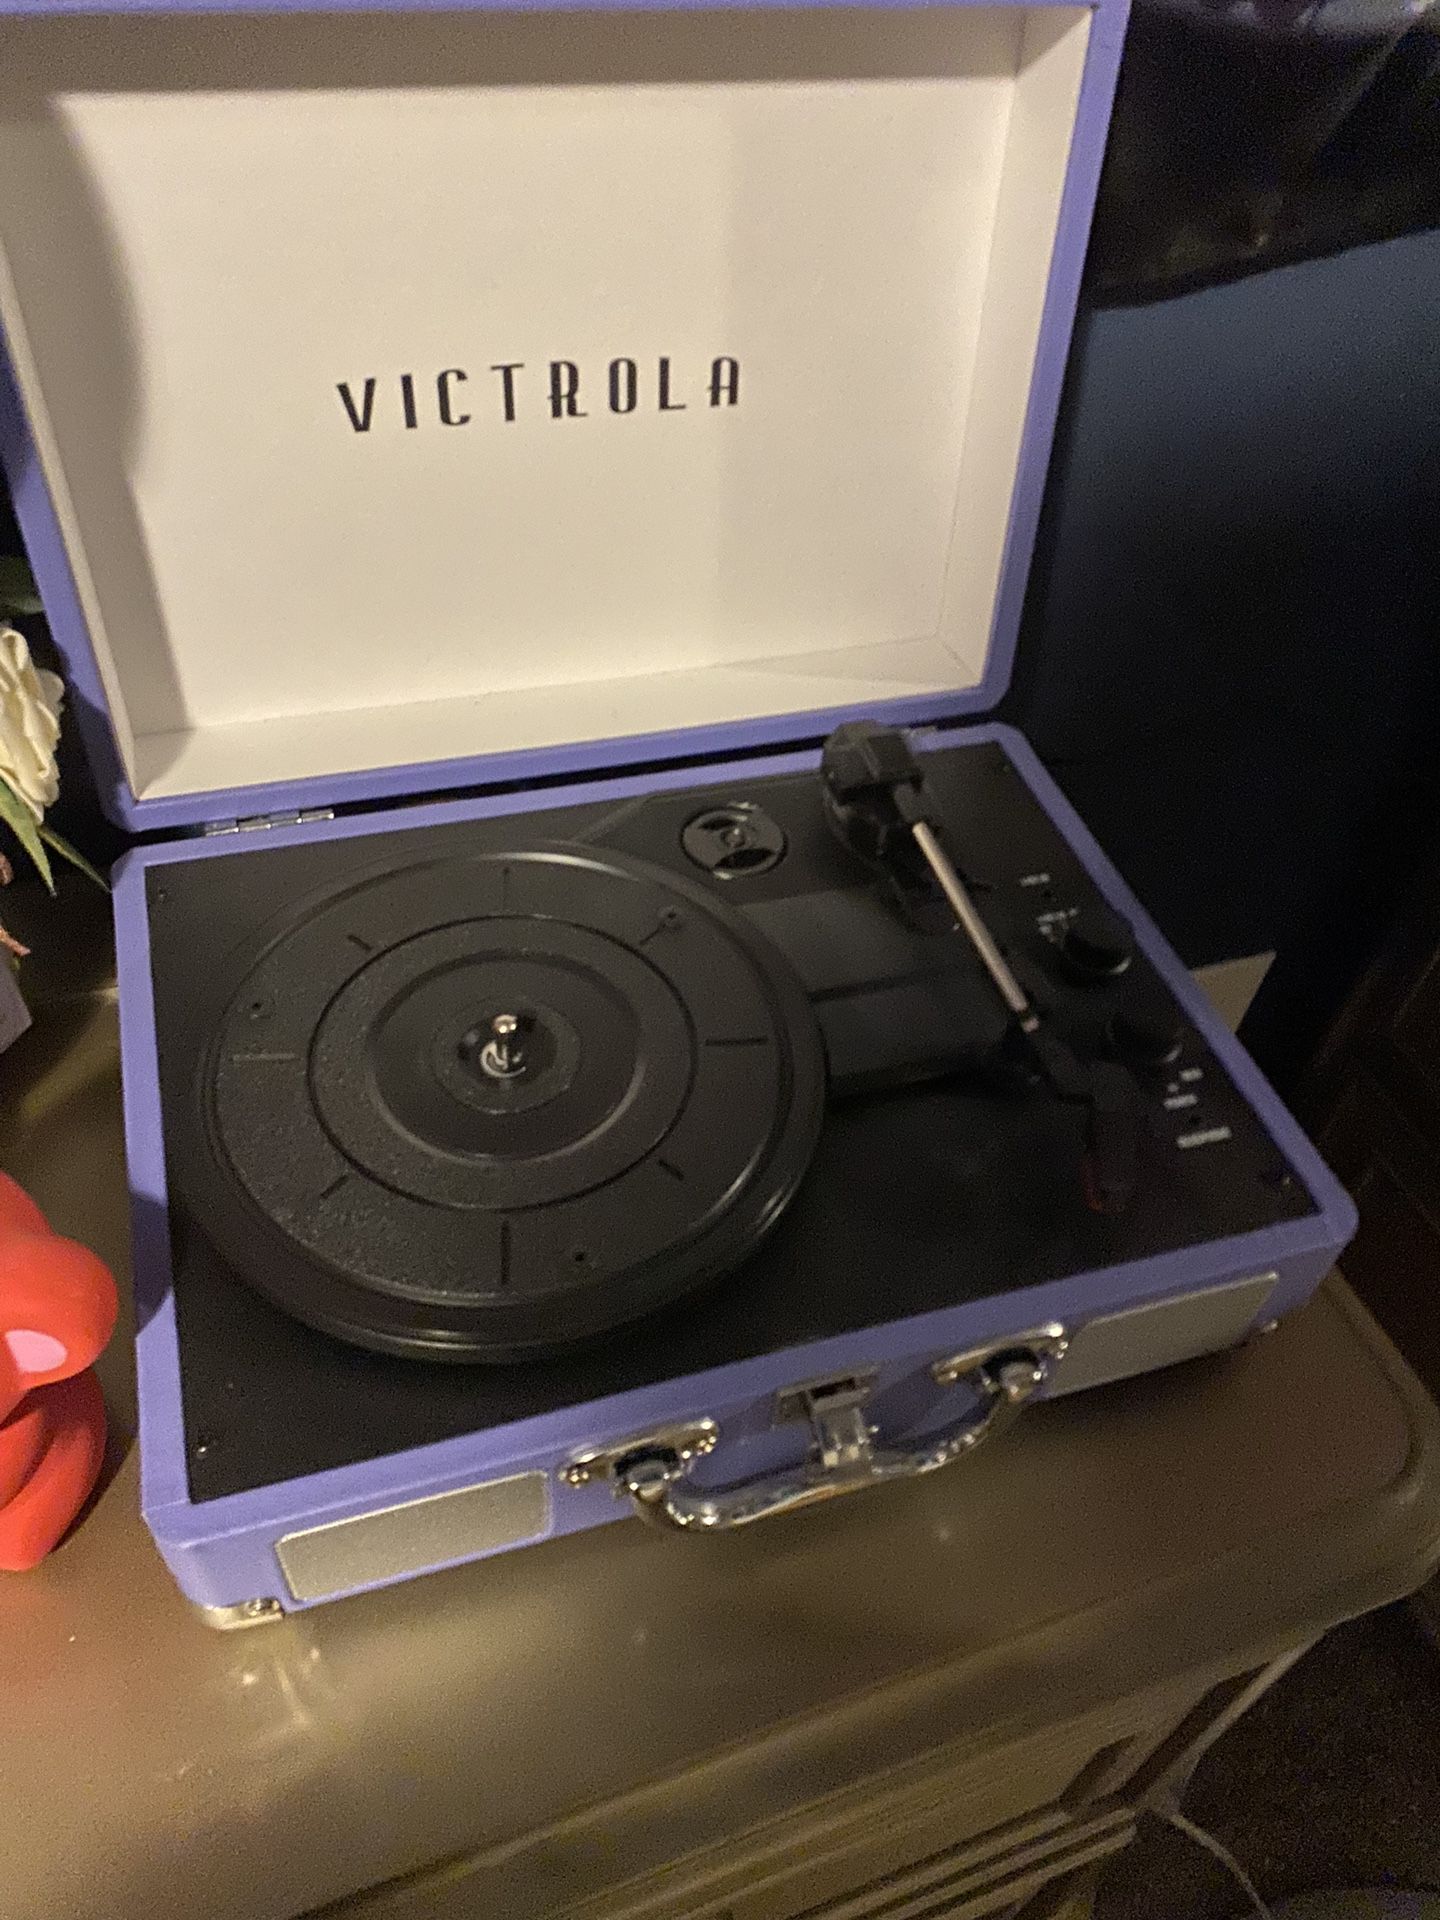 Vinyl Record Player Bluetooth 